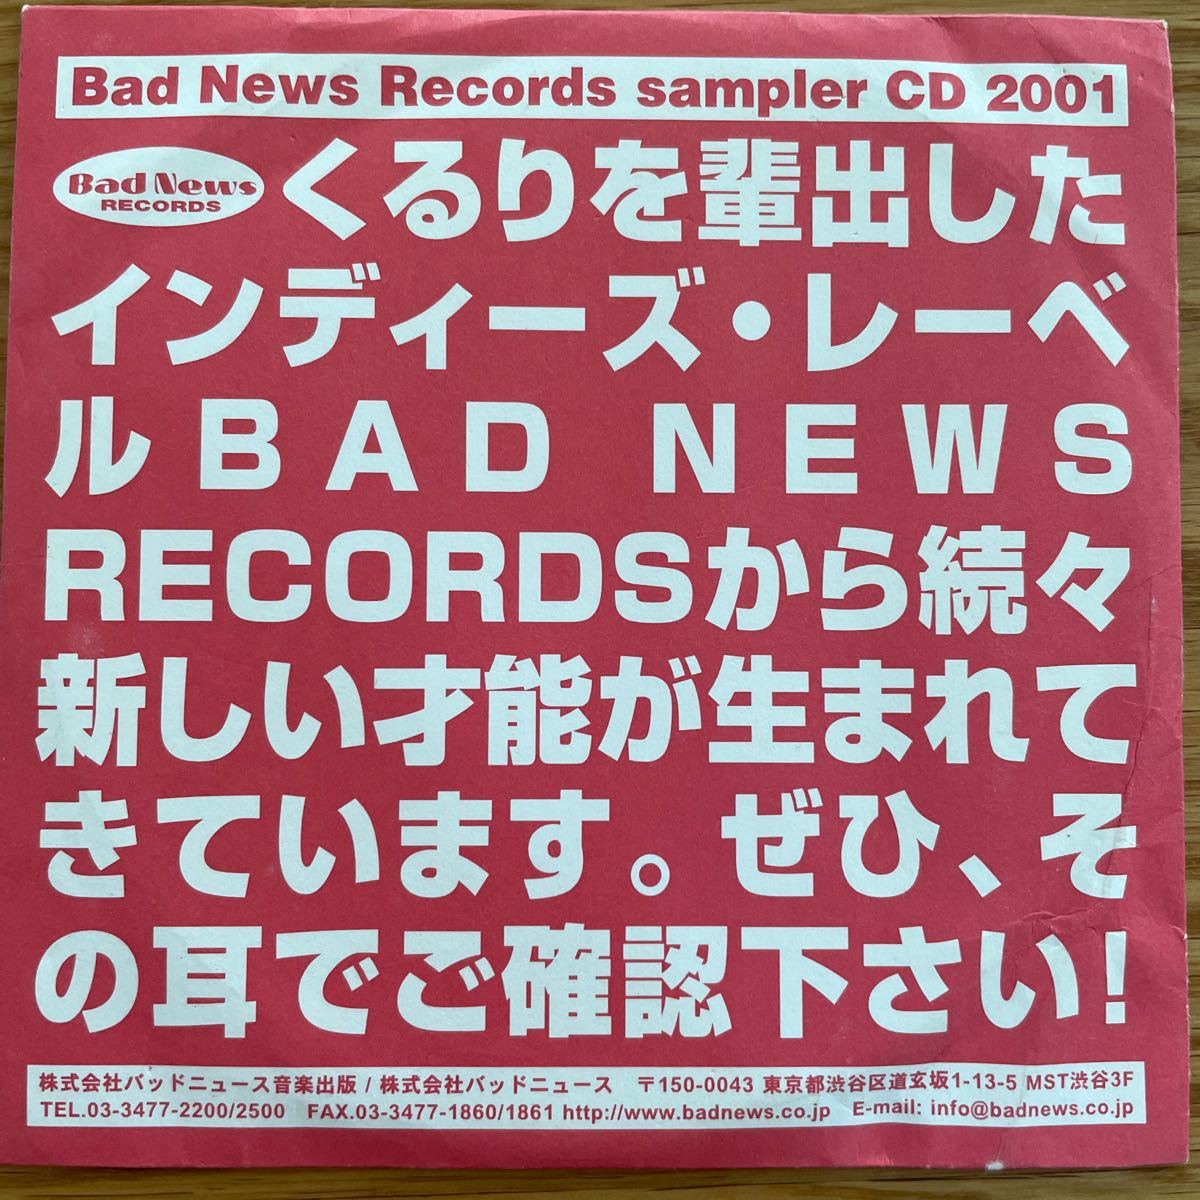 Bad News Records sampler CD 2001